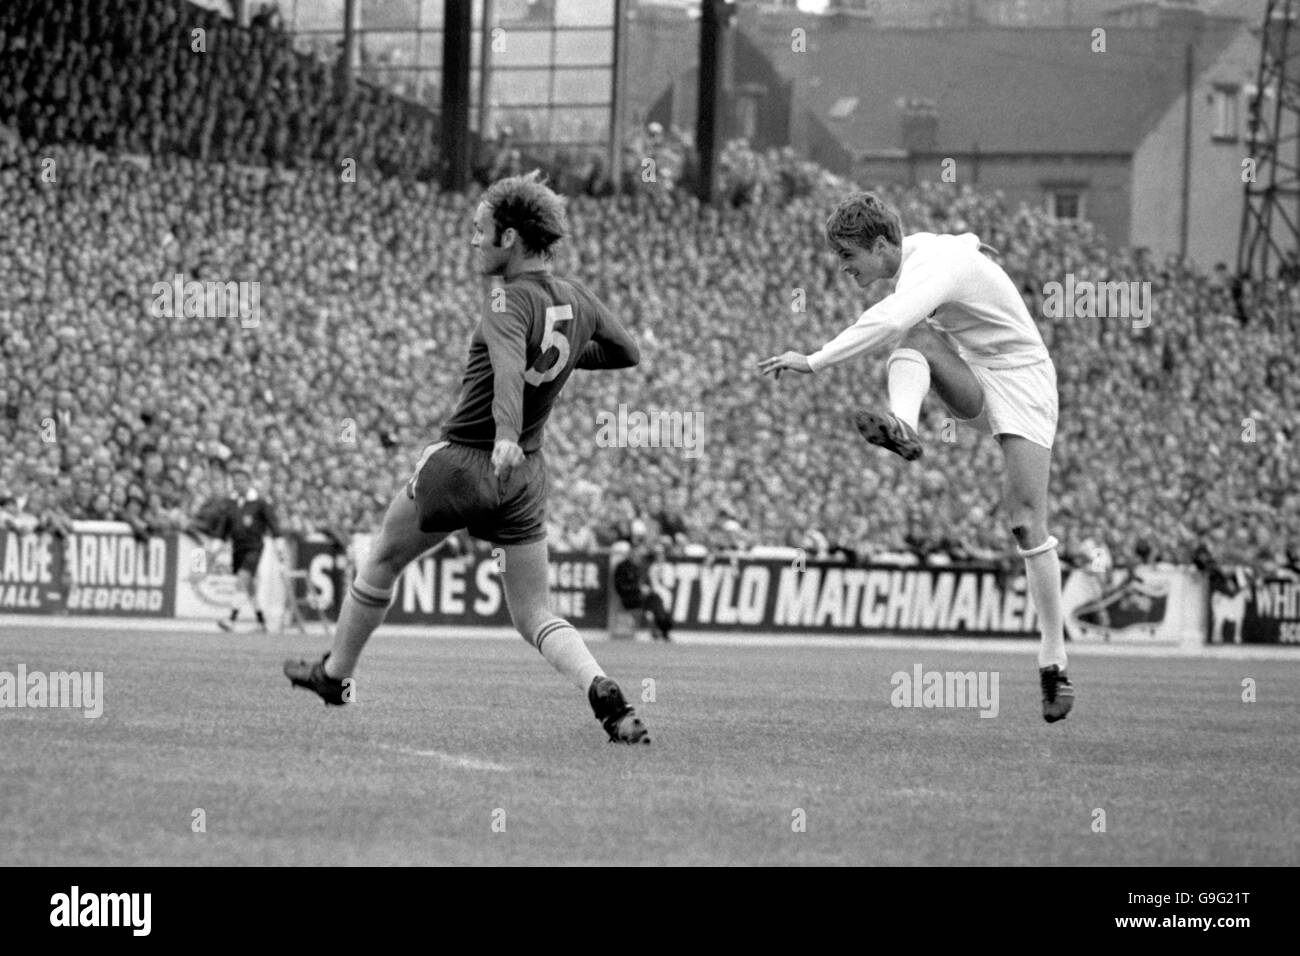 Soccer - Football League Division One - Leeds United v Chelsea. Leeds United's Allan Clarke (r) fires a shot past Chelsea's John Dempsey (l) Stock Photo